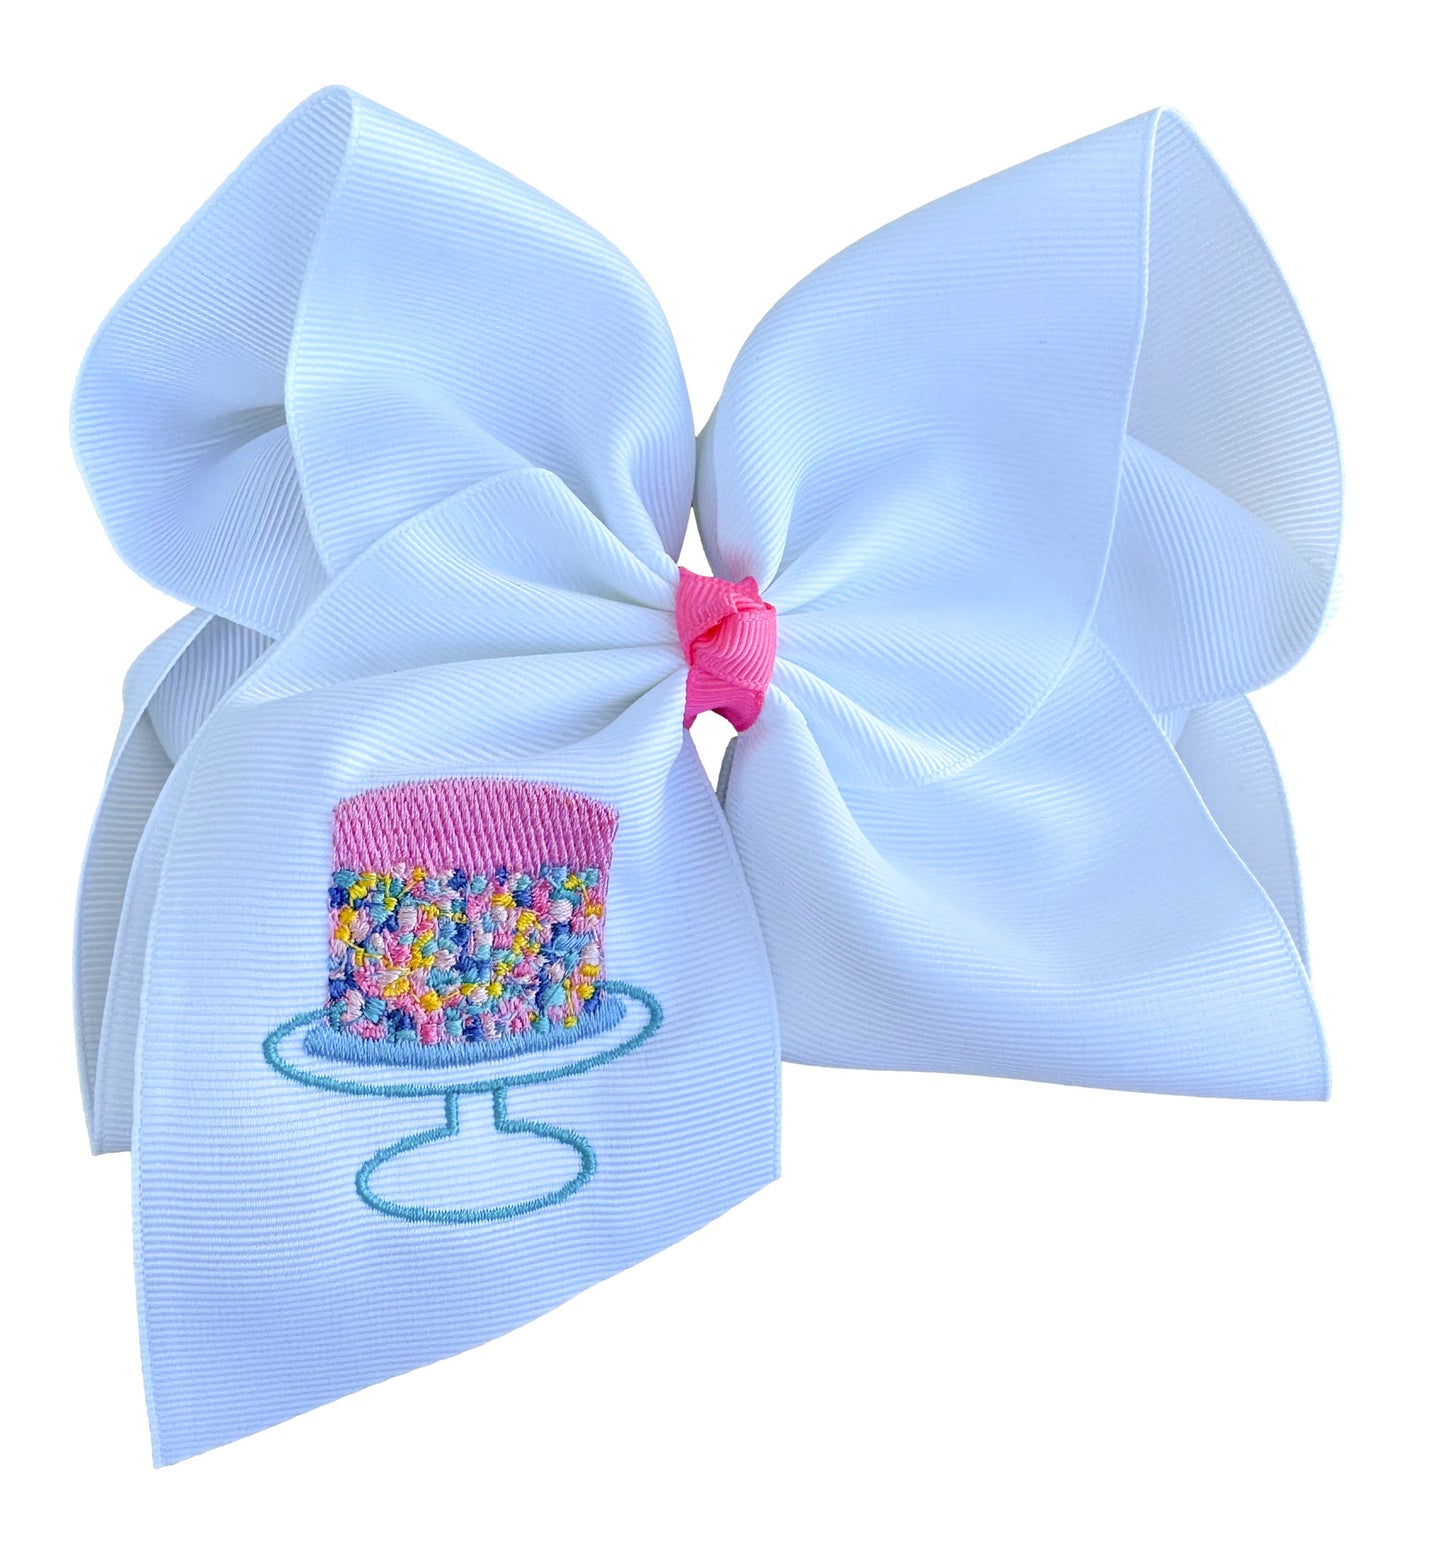 Confetti Cake Embroidered Bow